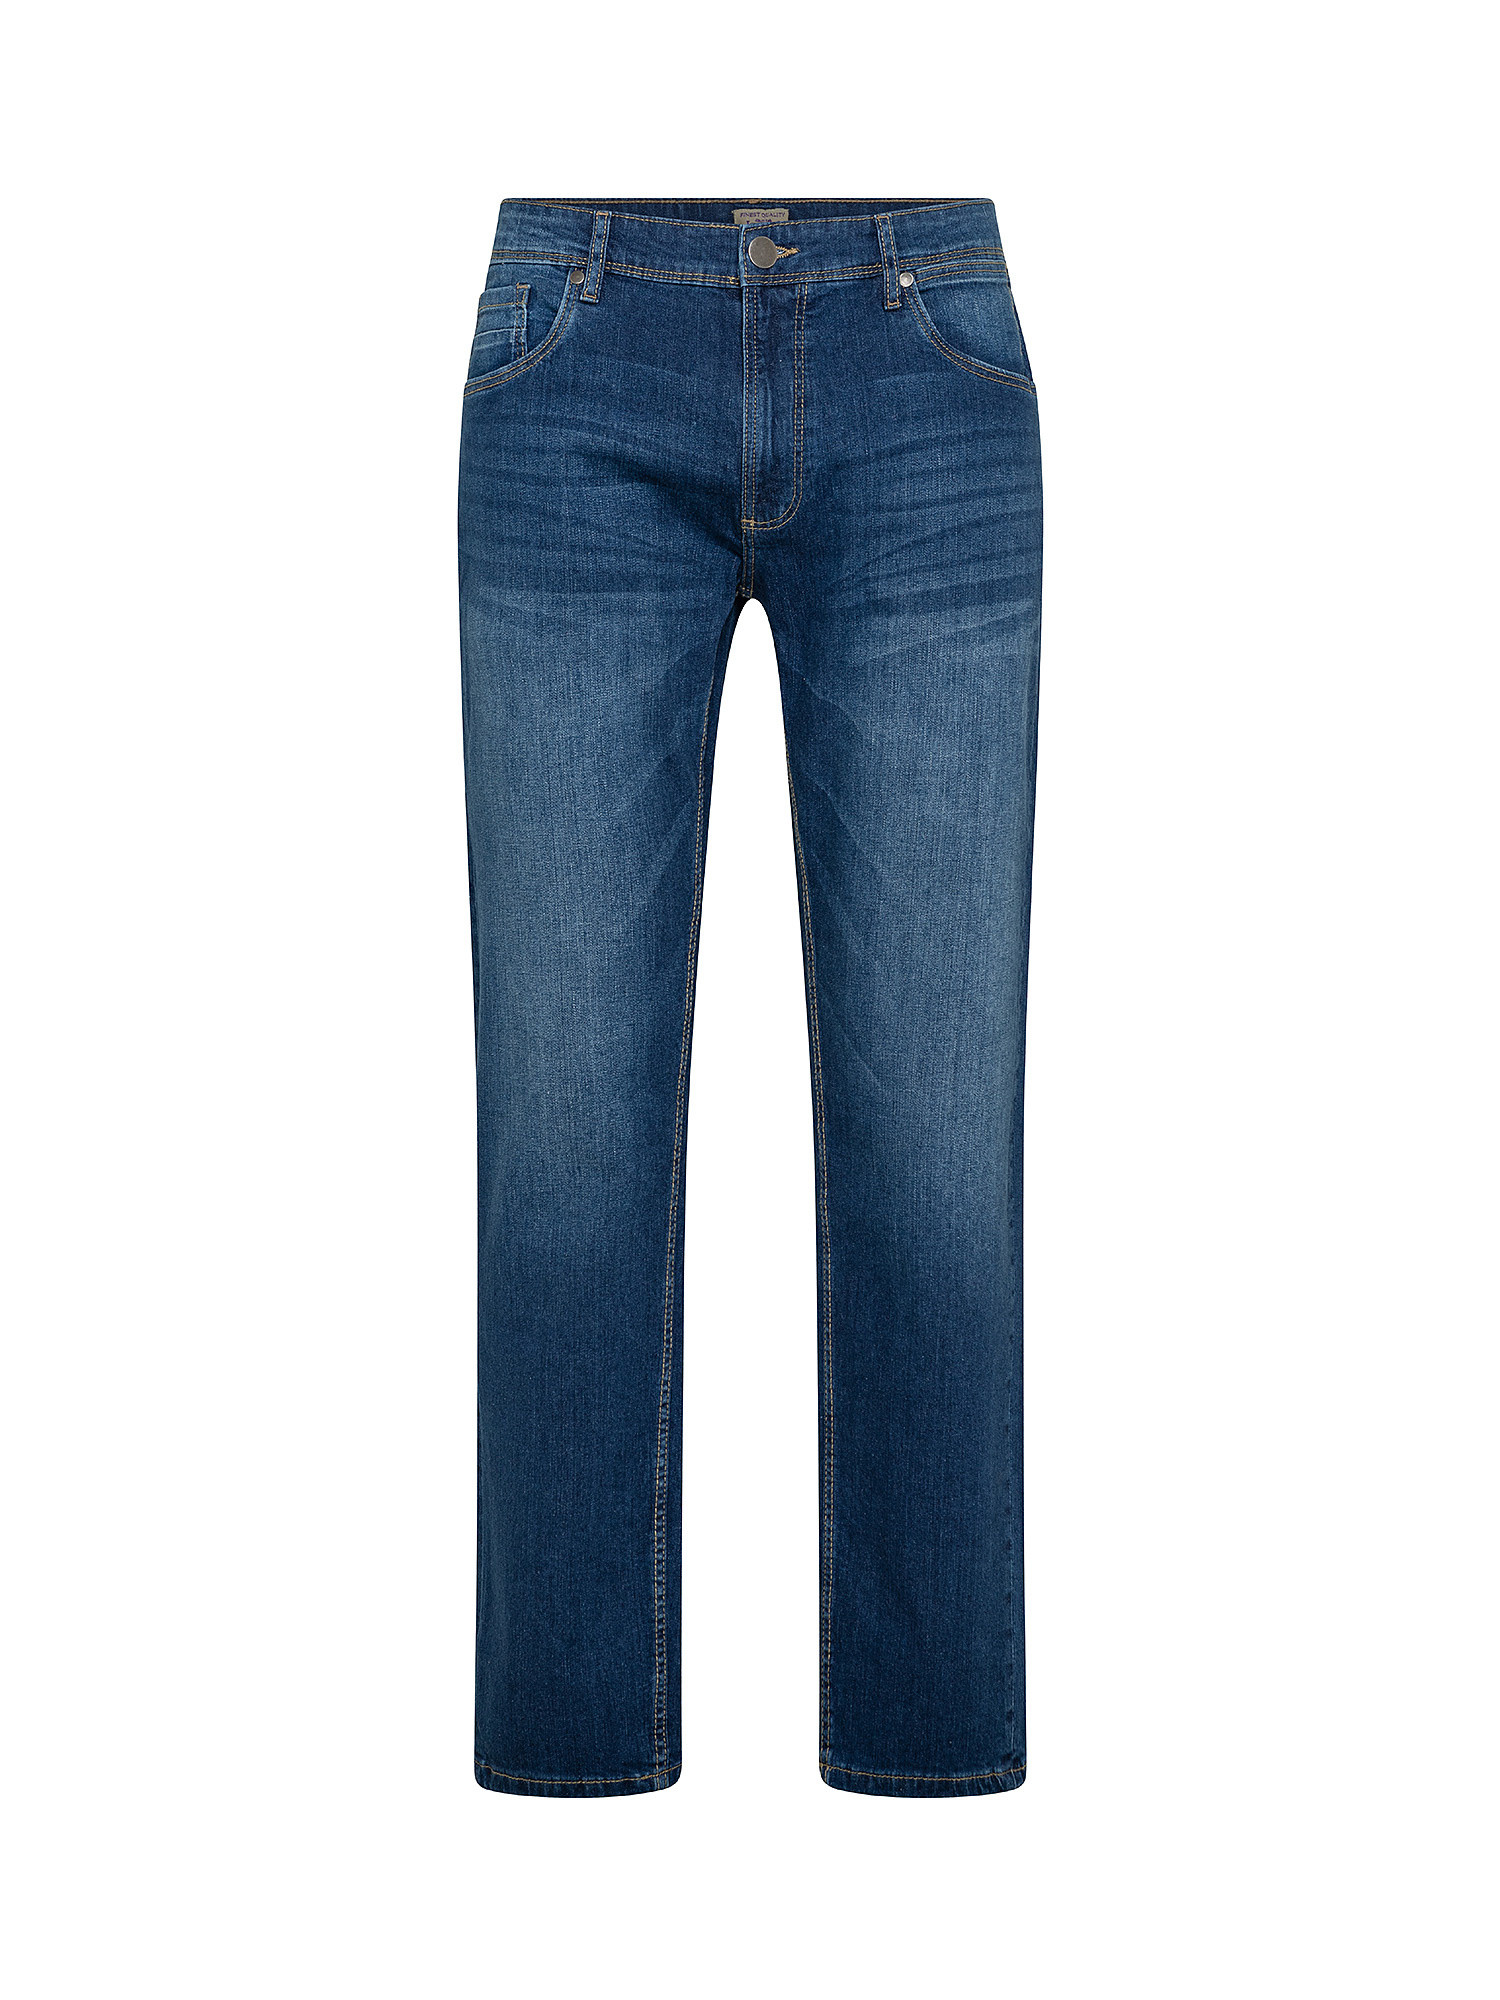 Jeans 5 tasche slim cotone leggero stretch, Blu scuro, large image number 0